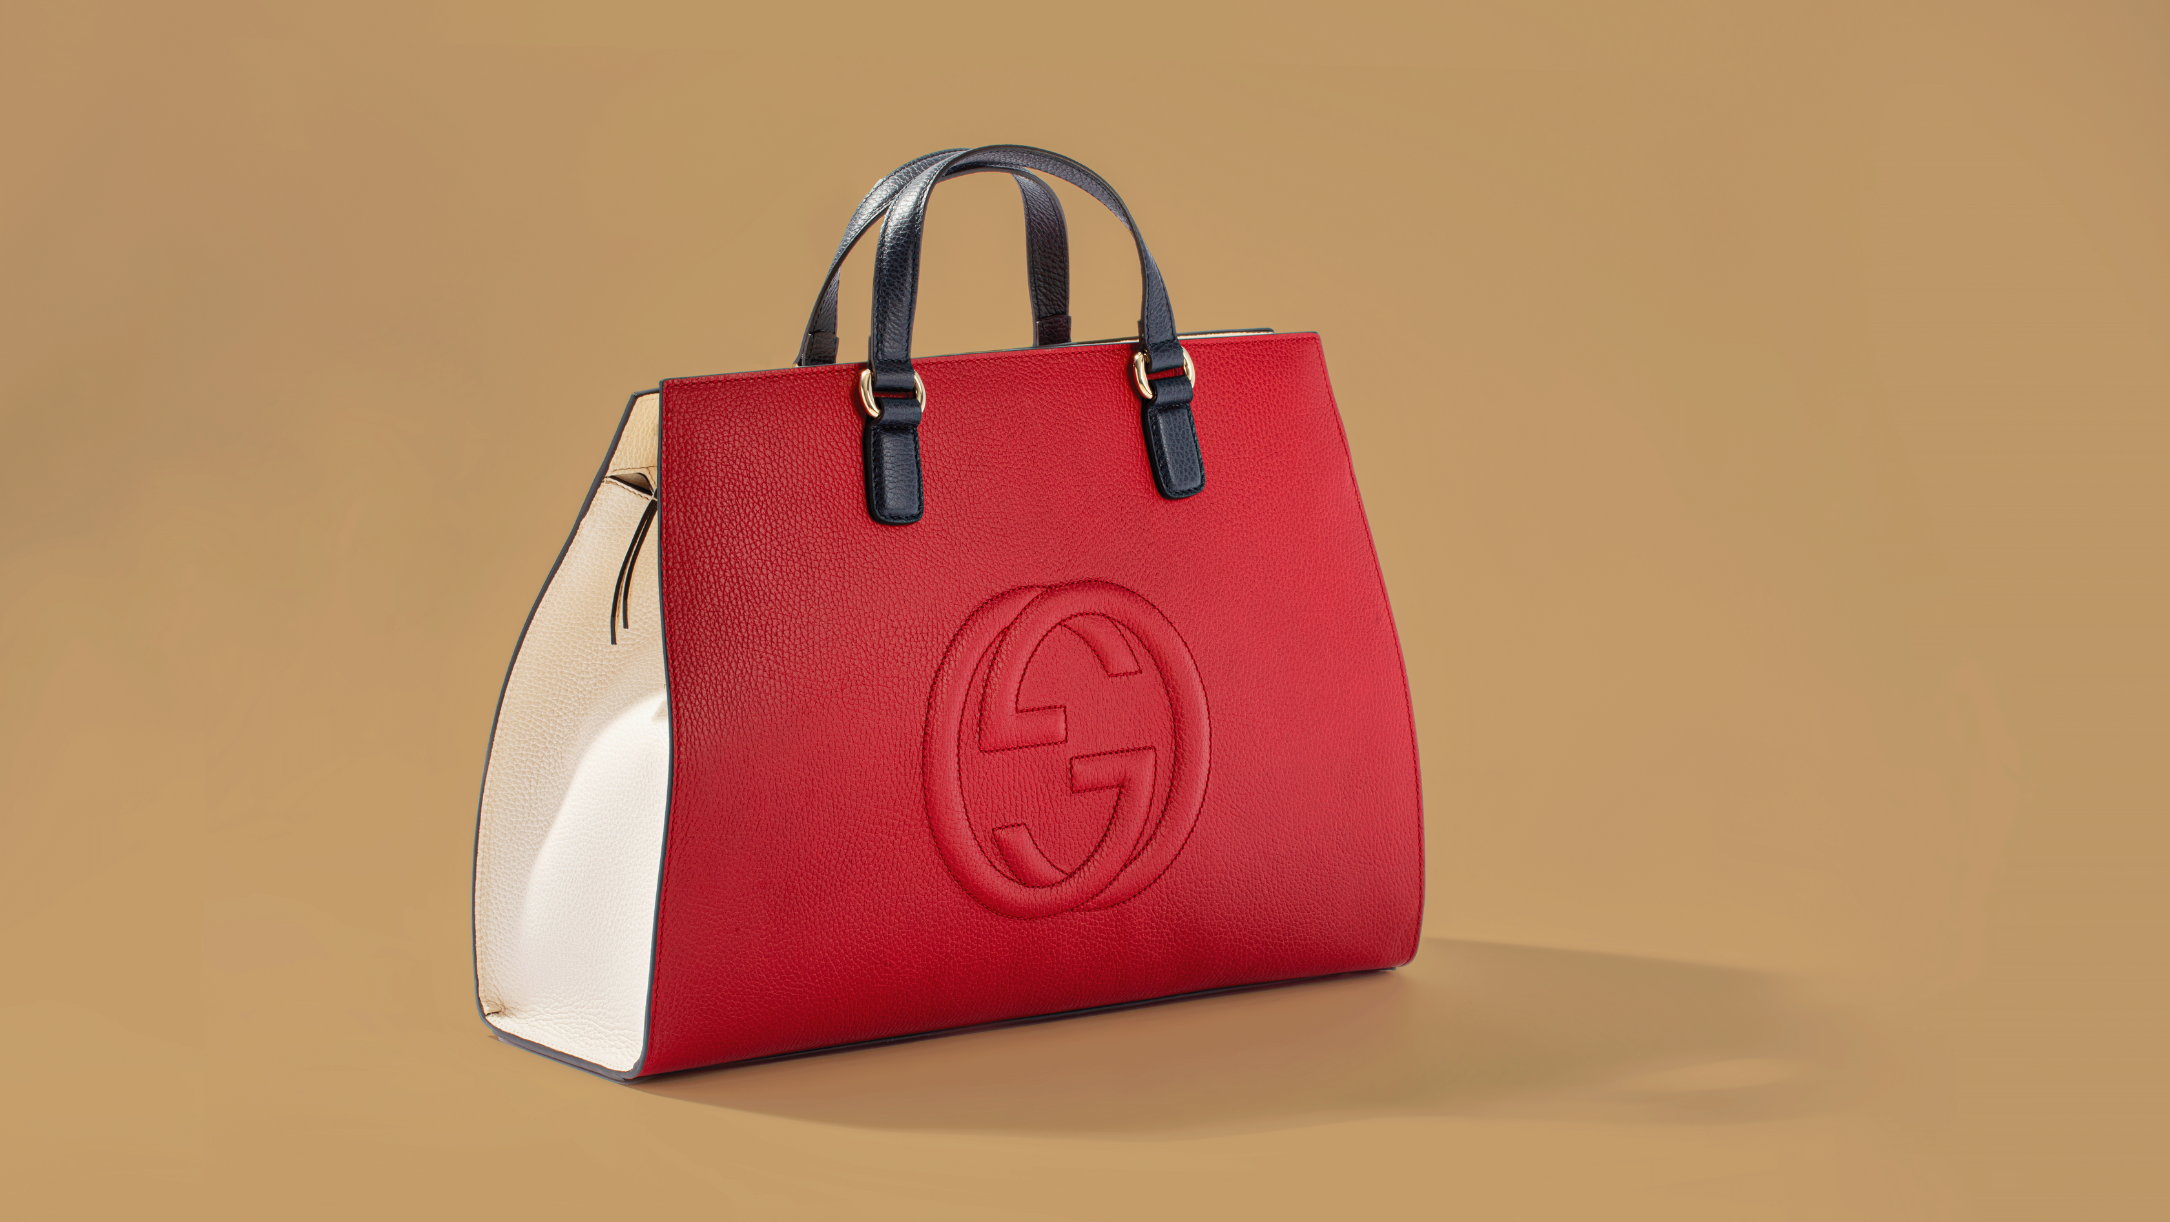 RED & GREEN STRIPED Gucci Purse 1970s Speedy Satchel Bag